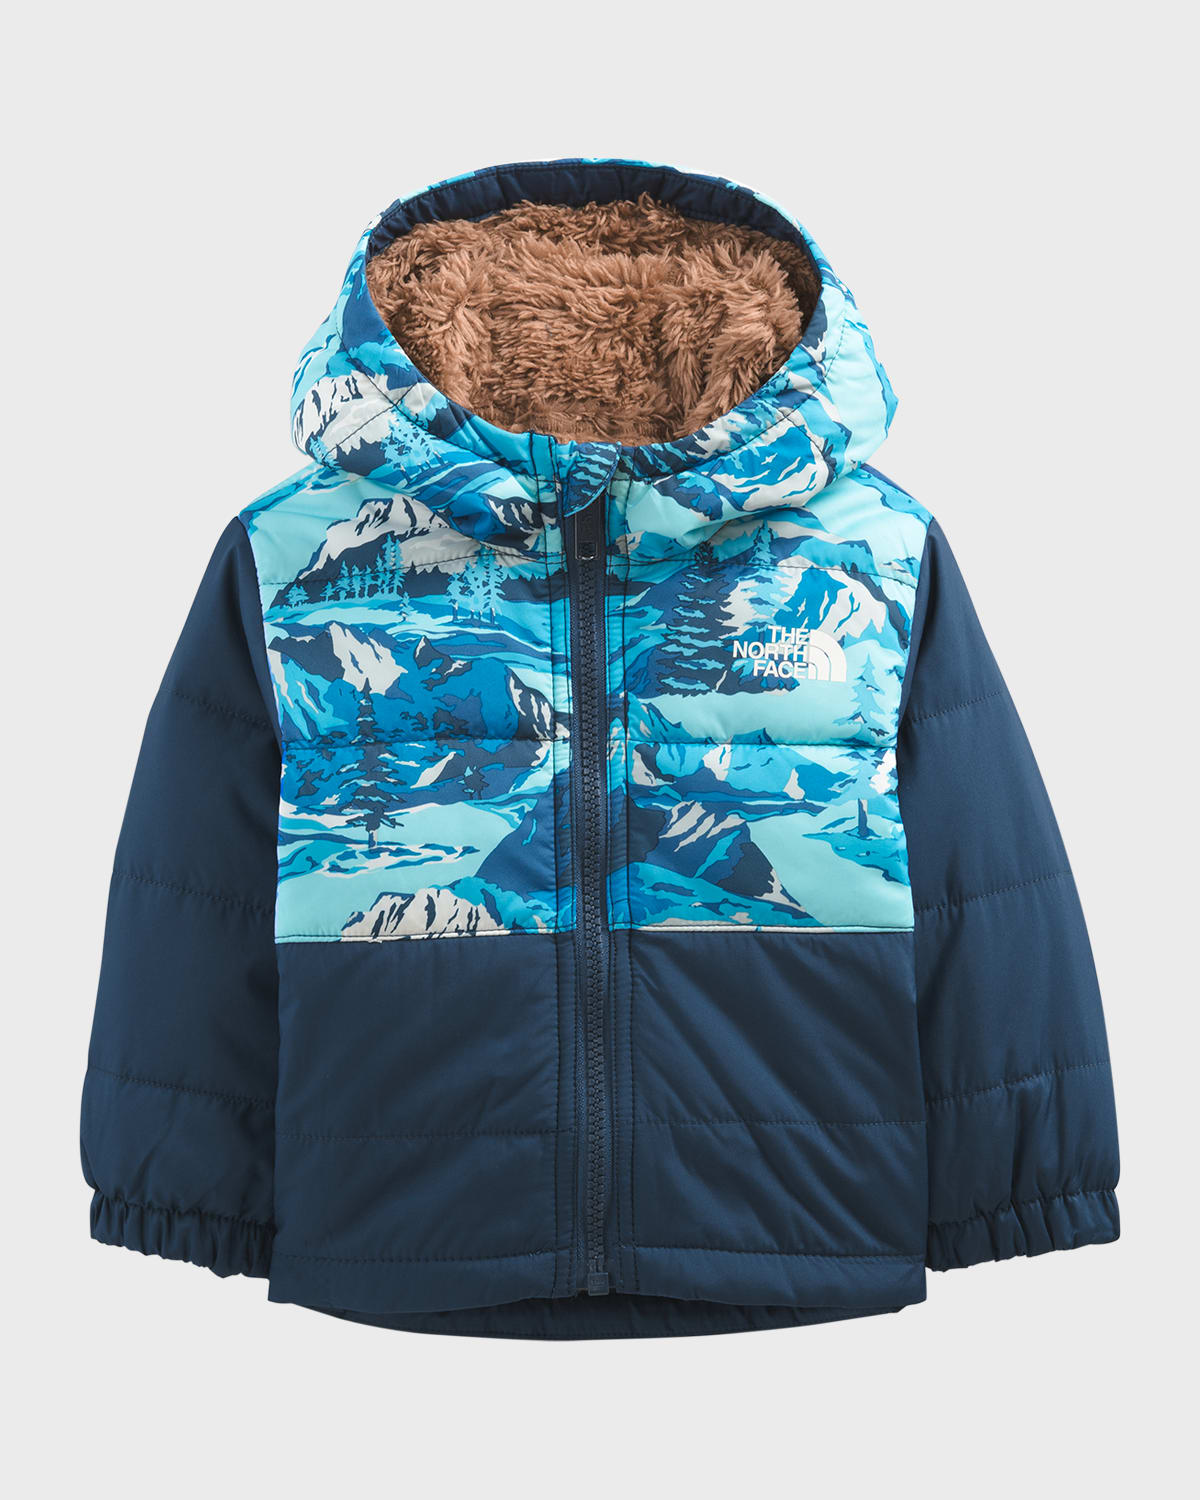 Boy's Mount Chimbo Fleece Reversible Hooded Jacket, Size 6M-24M